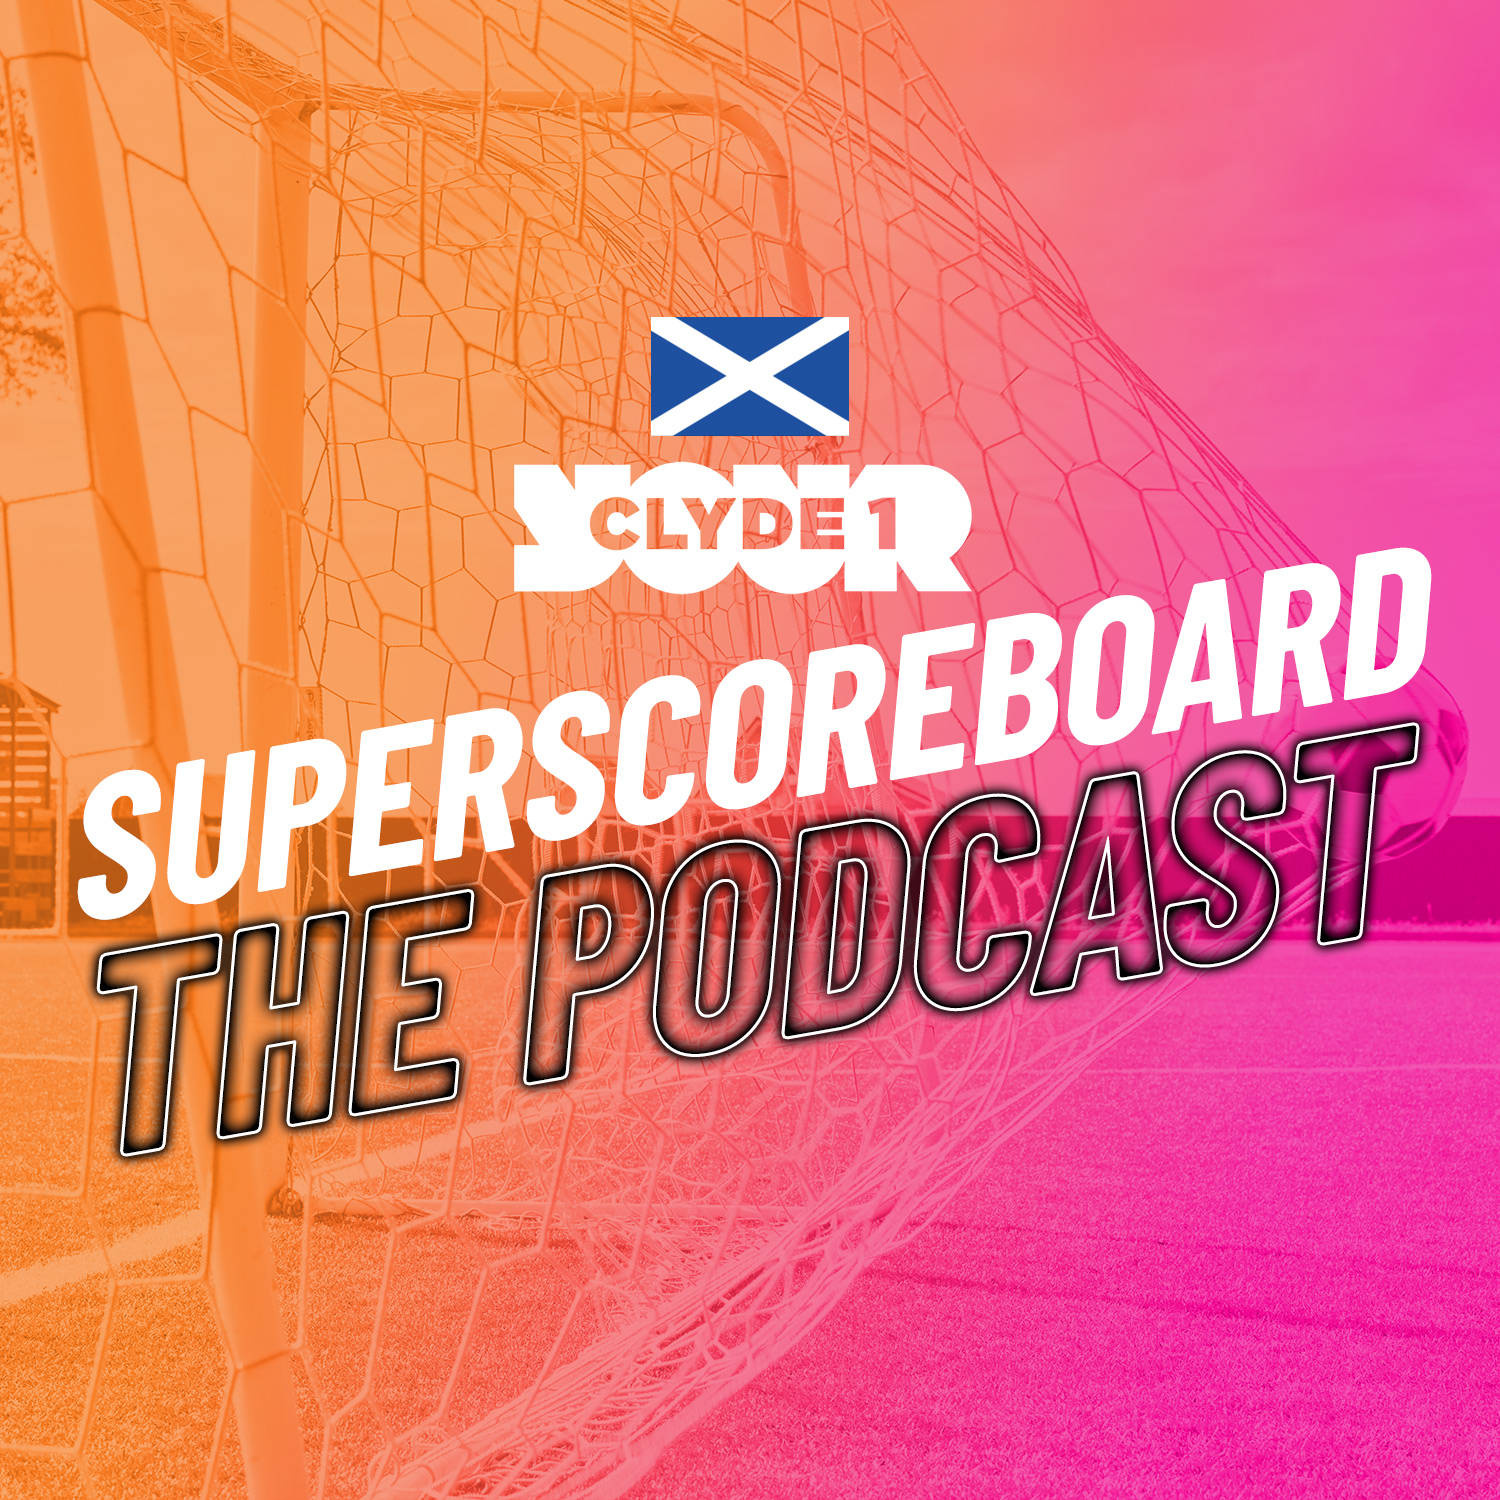 Saturday 23rd December Clyde 1 Superscoreboard Part 2